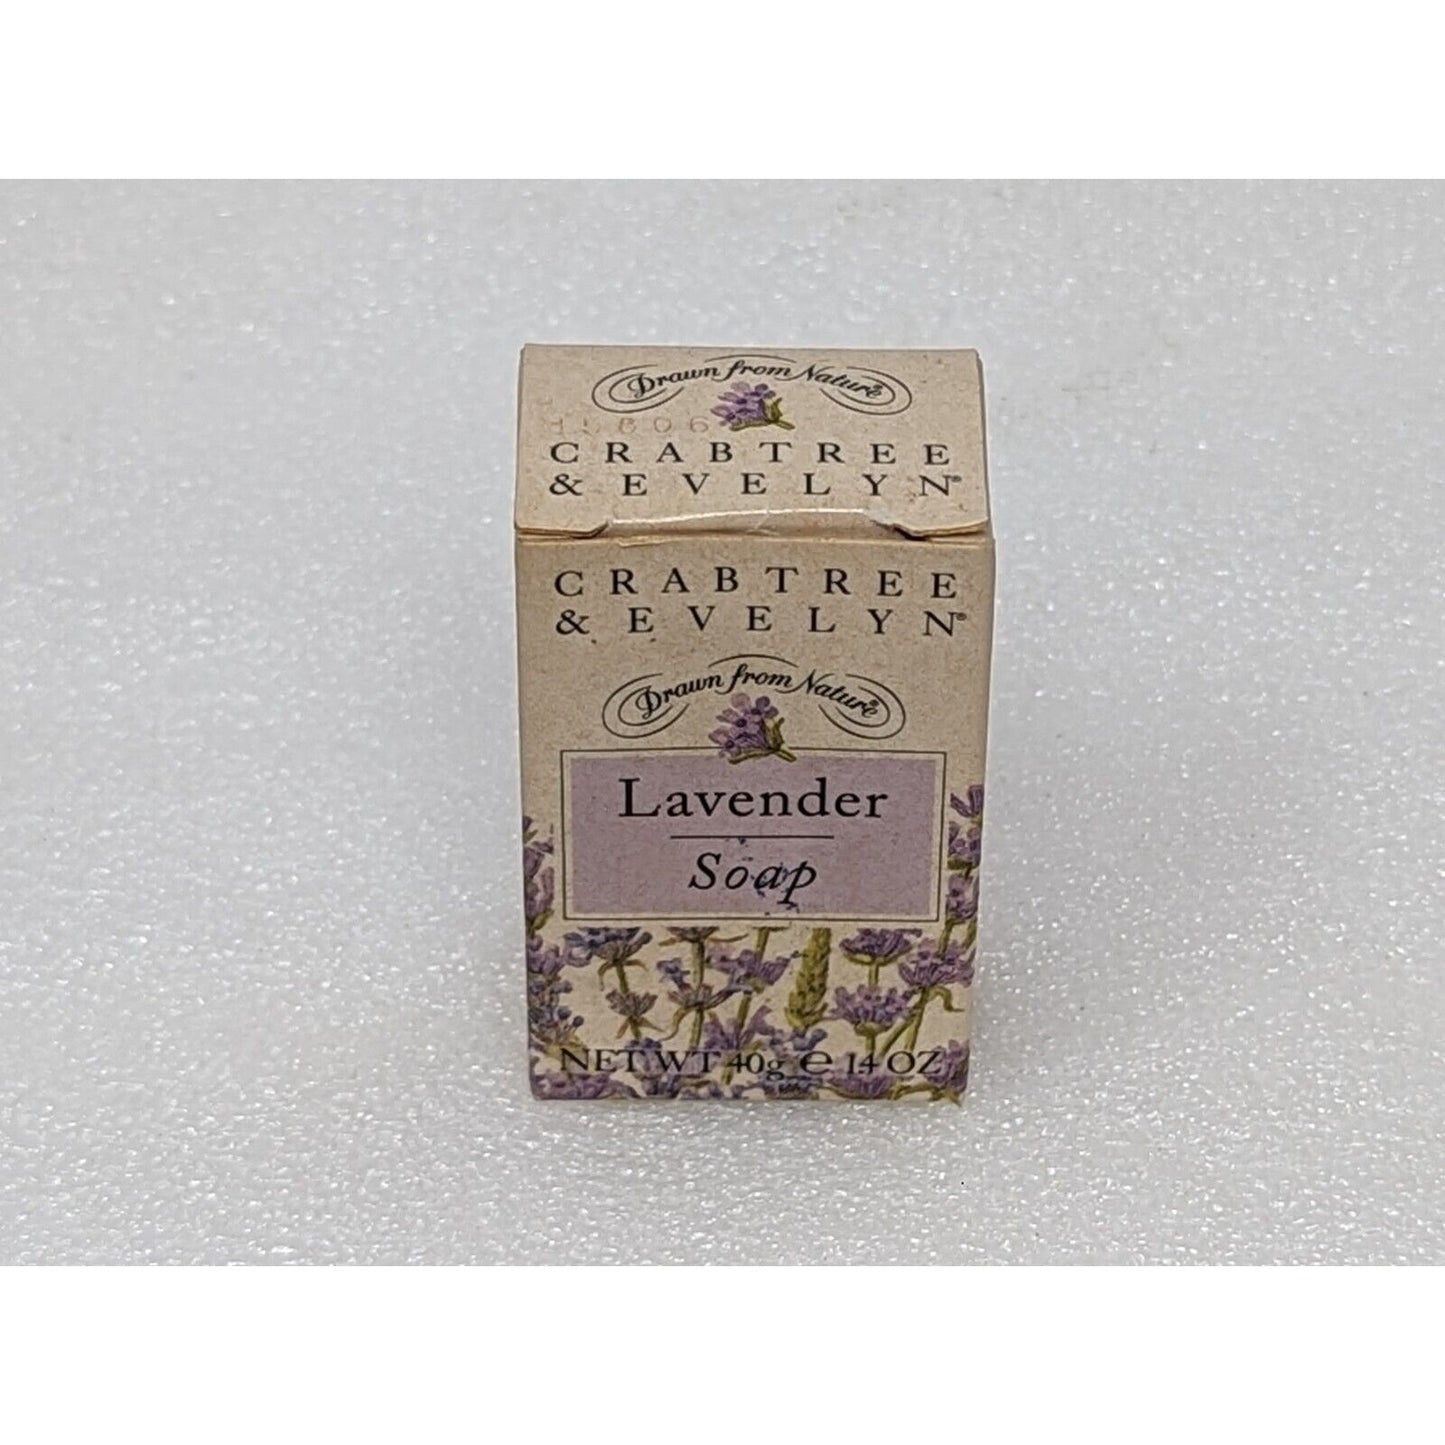 Crabtree & Evelyn Lavender Soap 1.4 oz Lavande Savon 40 g Travel Size